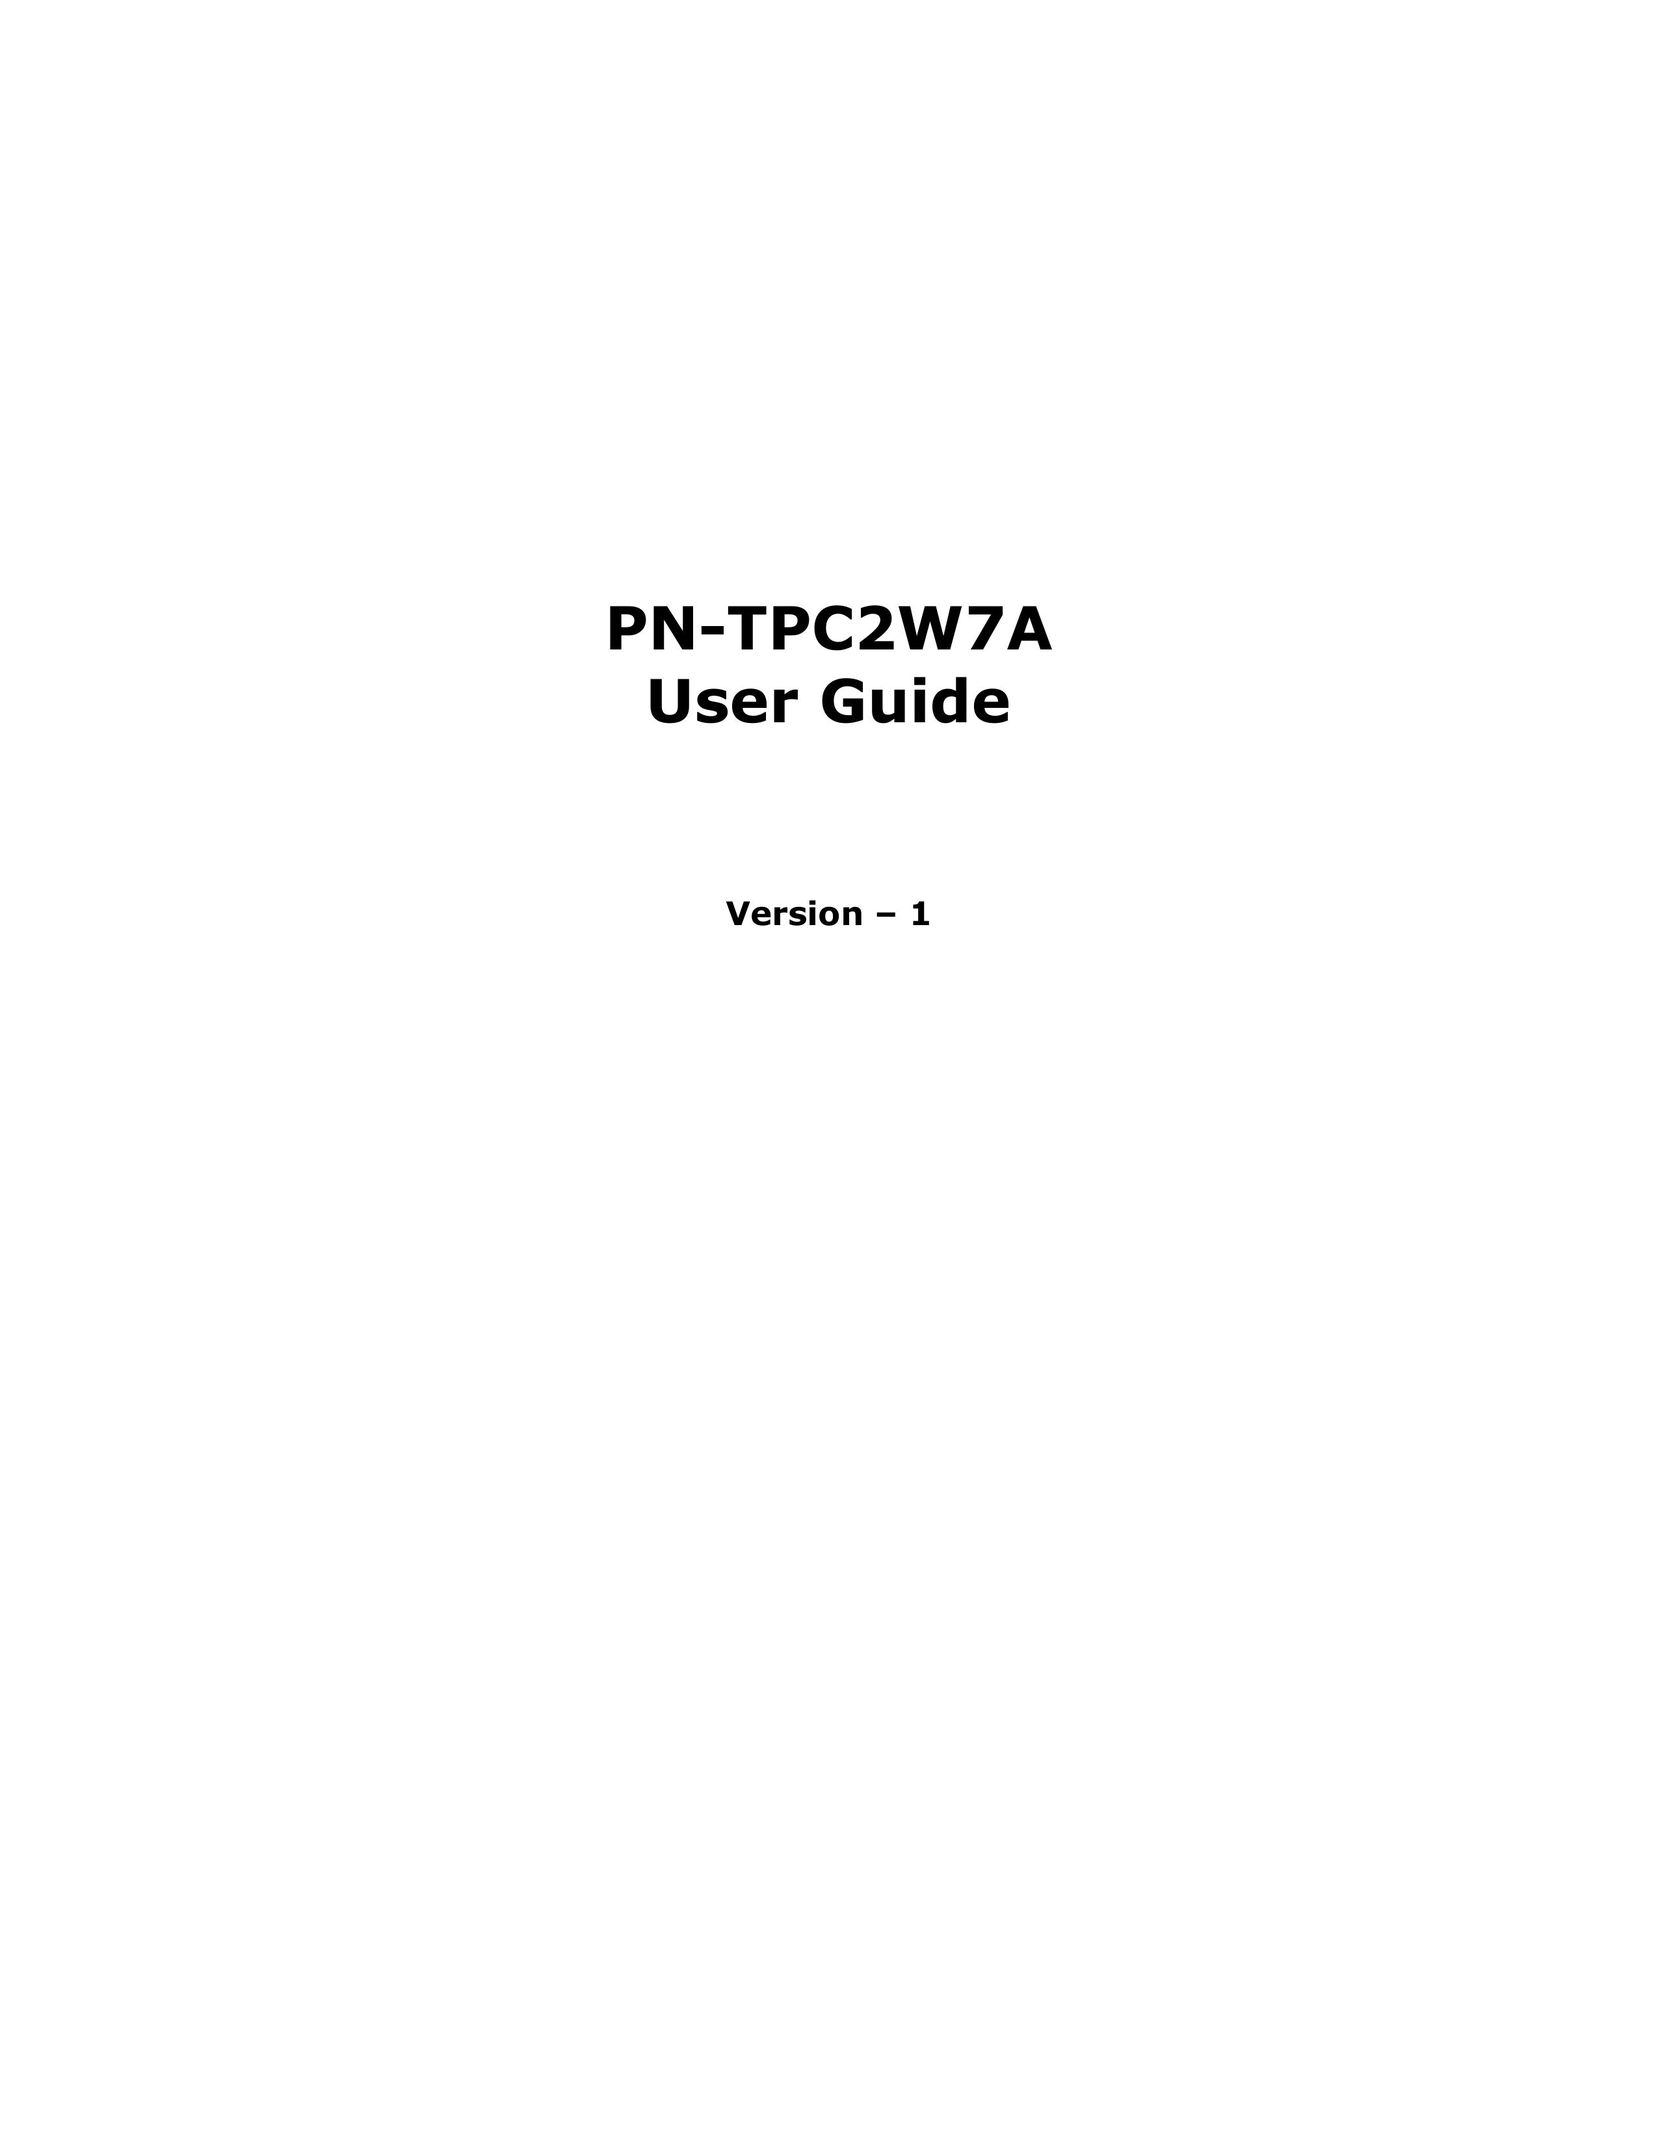 Sharp PN-TPC2W7A Personal Computer User Manual